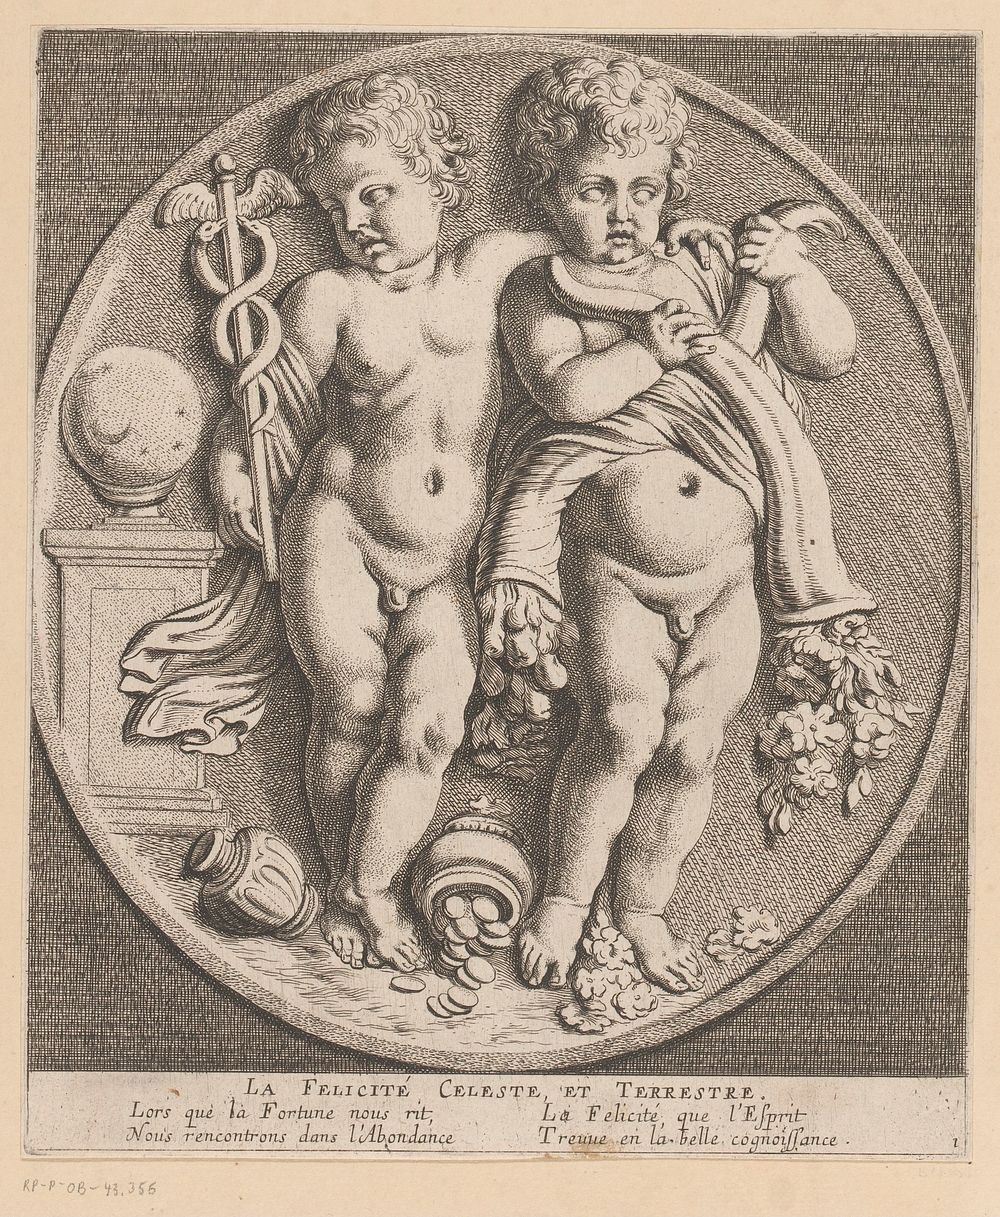 Hemelse en aardse geluk verbeeld door twee putti (1654) by Louis Ferdinand I Elle, Gerard van Opstal, Tetelin, Jacques van…